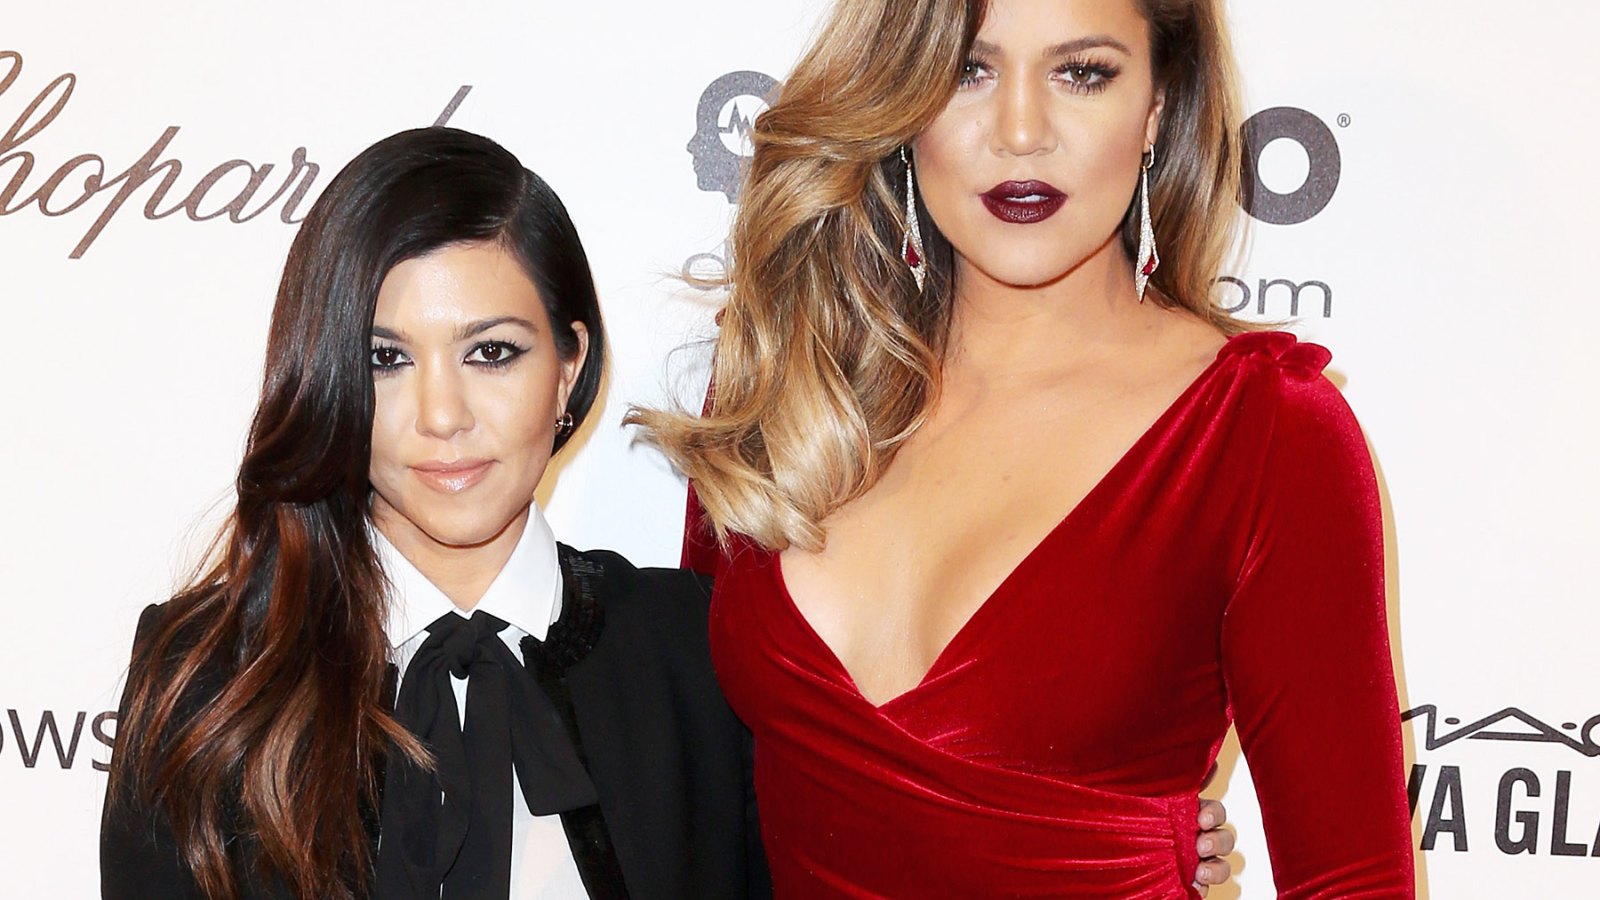 Kourtney Kardashian and Khloe Kardashian on March 2, 2014